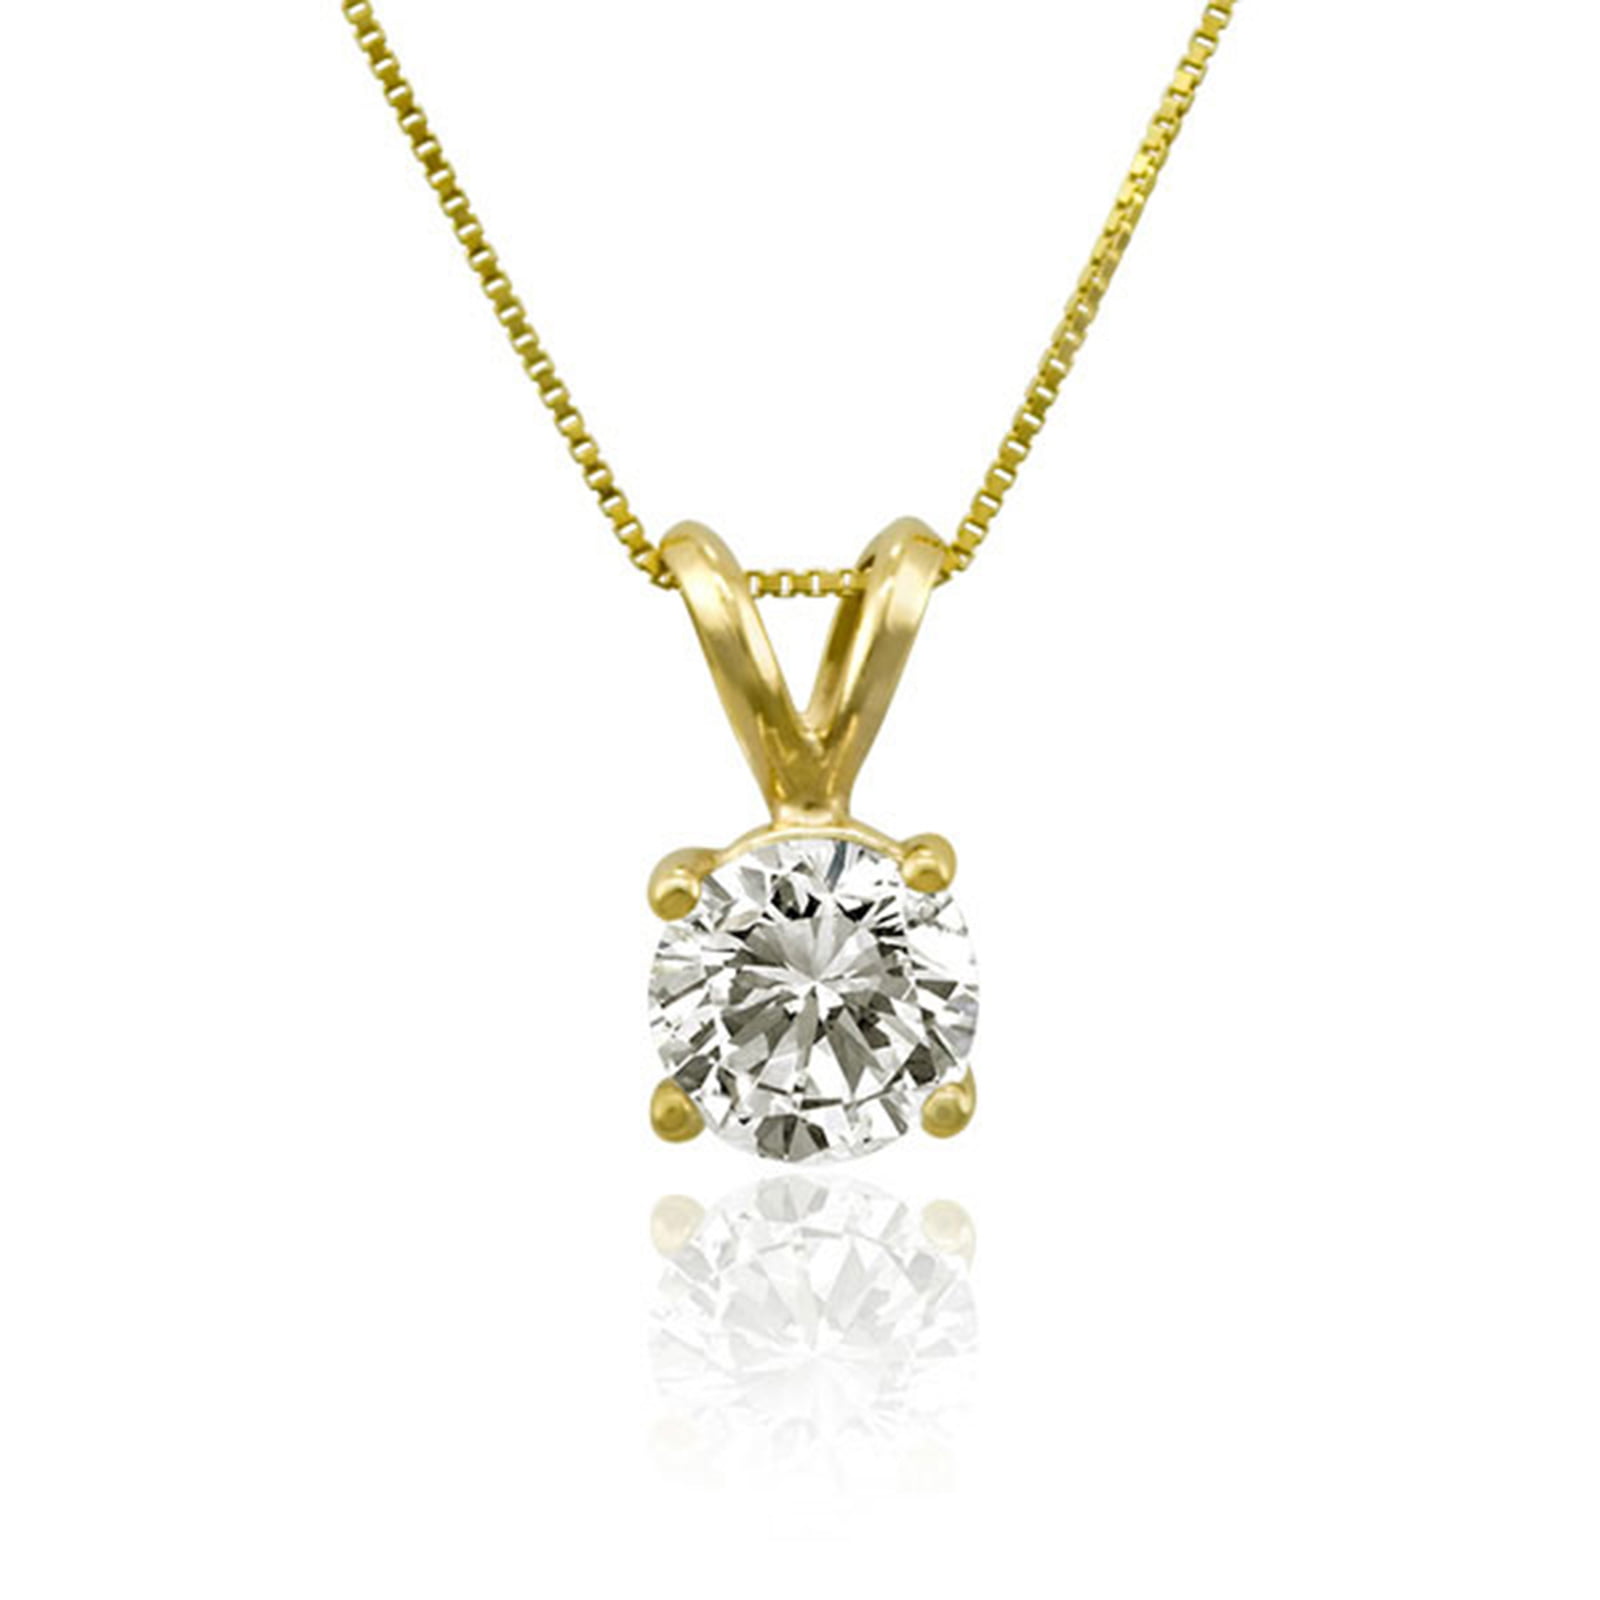 1.9ct Princess Cut Solitaire Solid 14k White Gold Pendant Necklace 16" Chain 